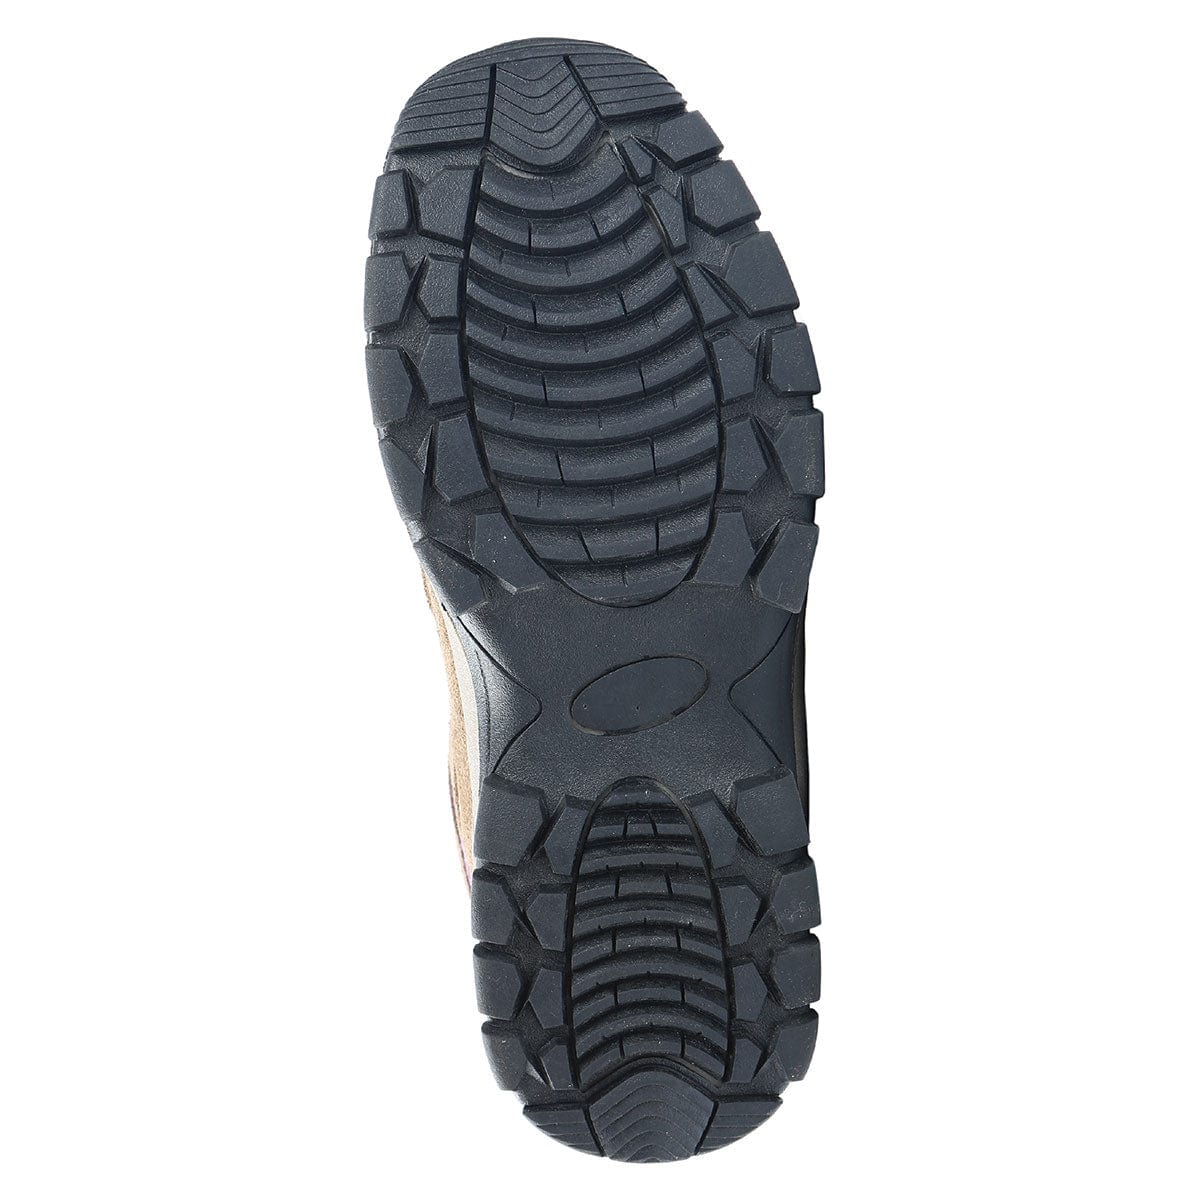 Northside Women's Snohomish 6" Mid Waterproof Hiking Boots